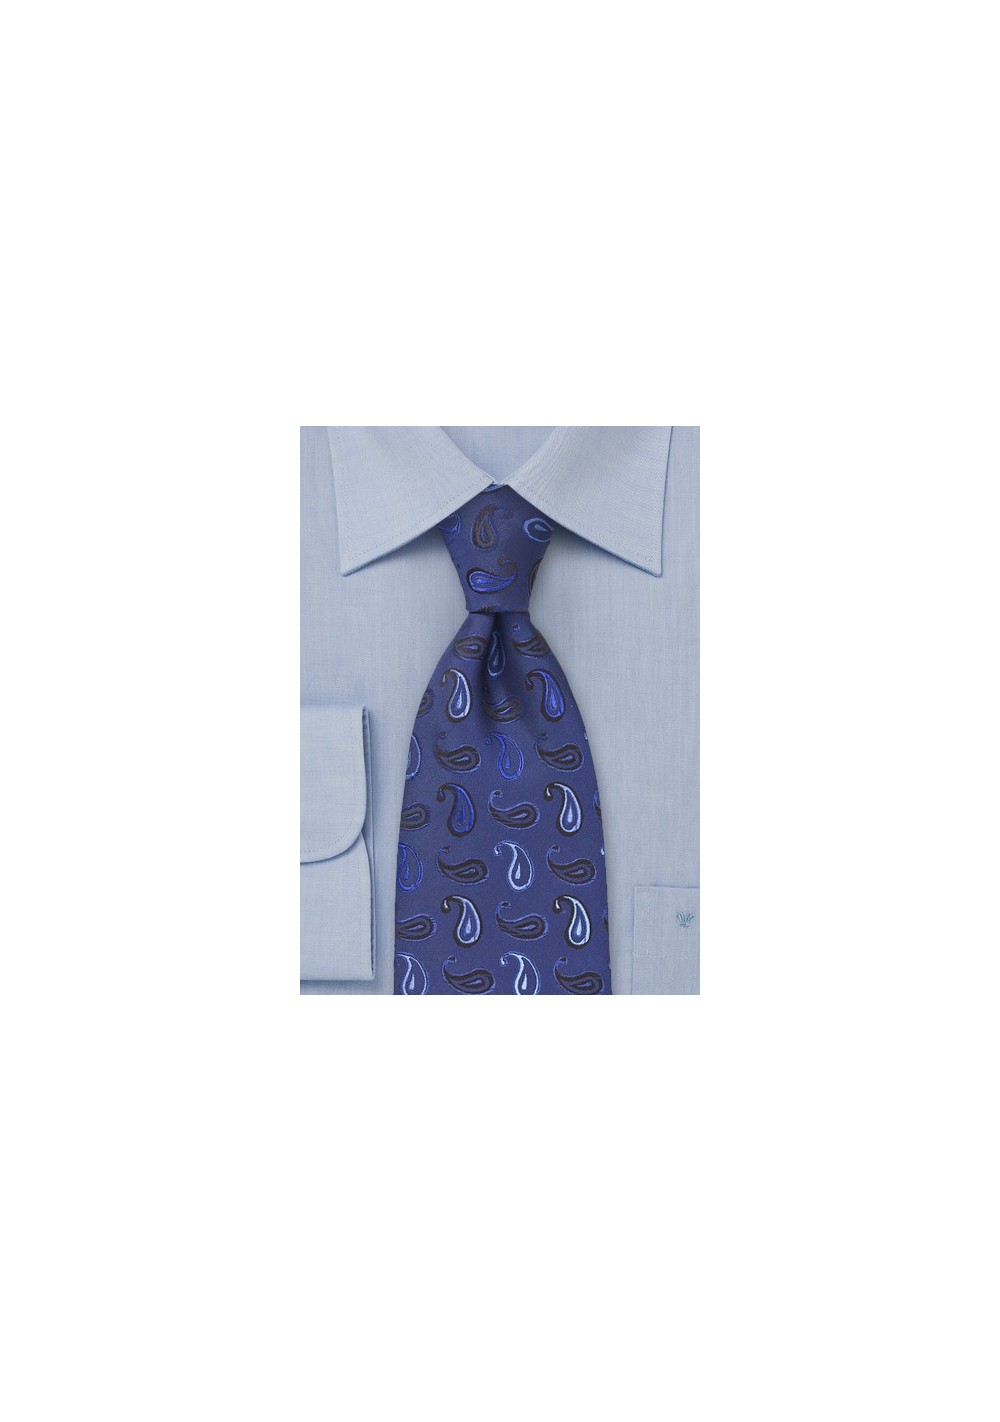 Tonal Blue Paisley Tie